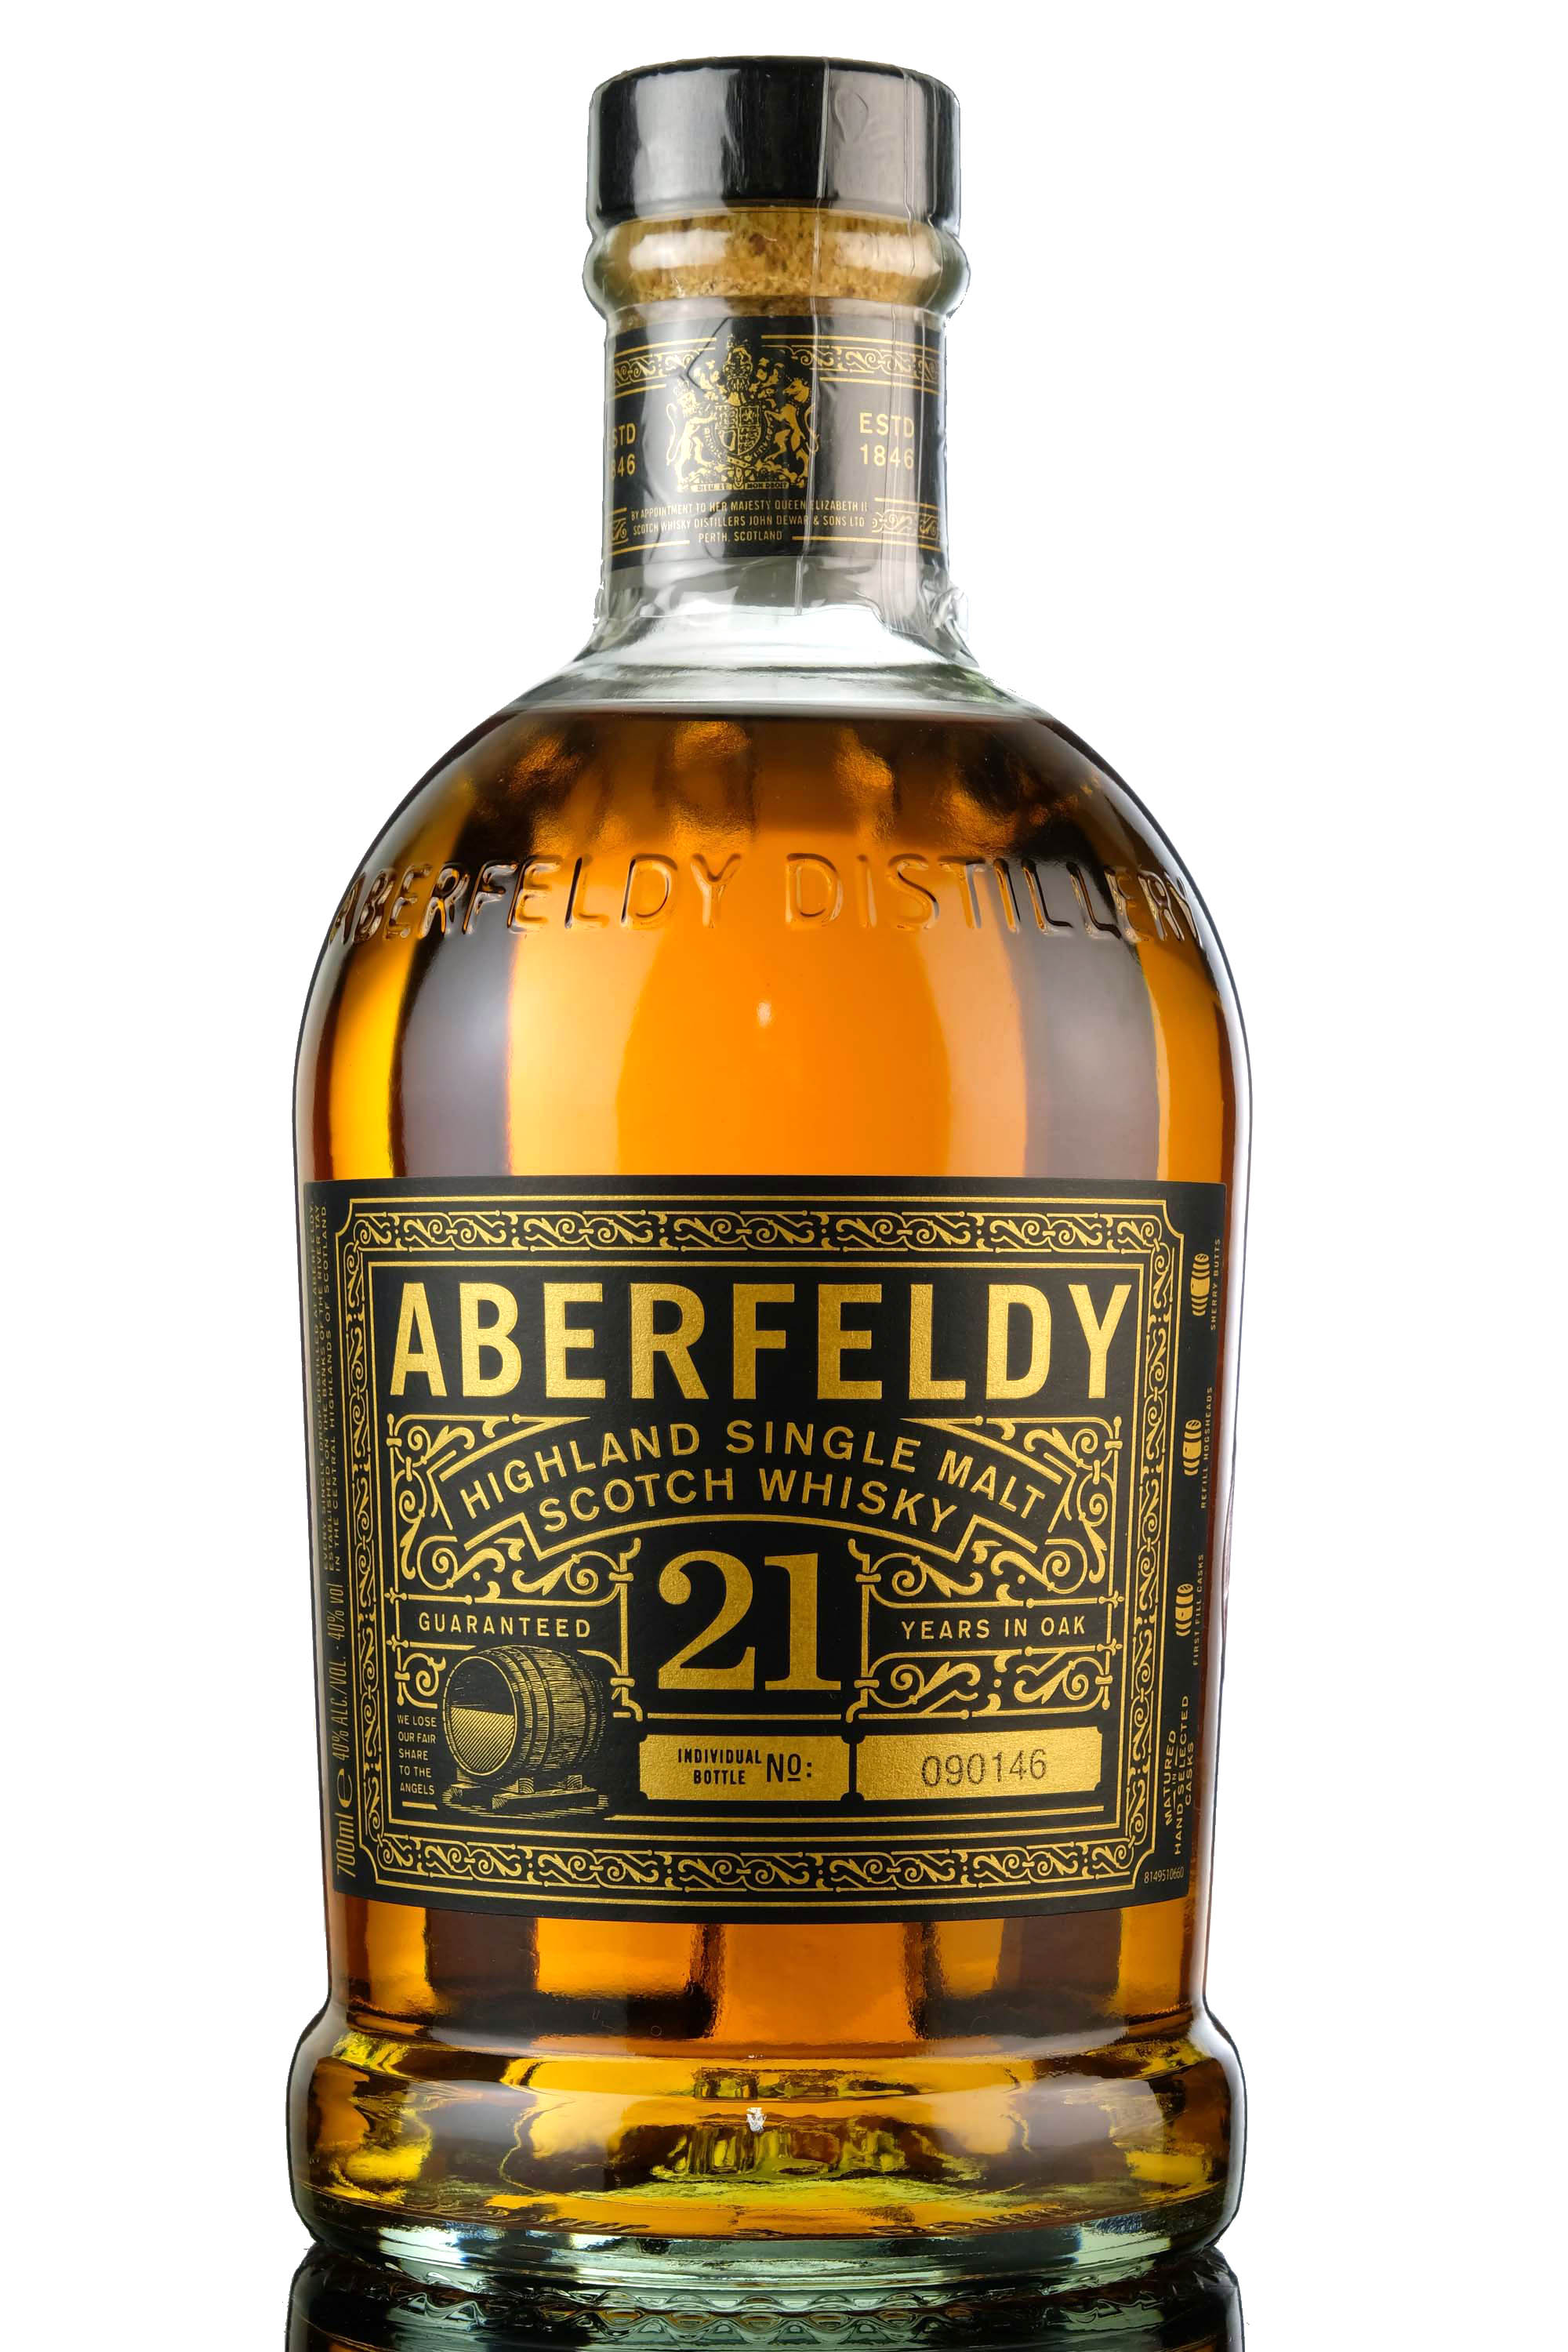 Aberfeldy 21 Year Old - Limited Release